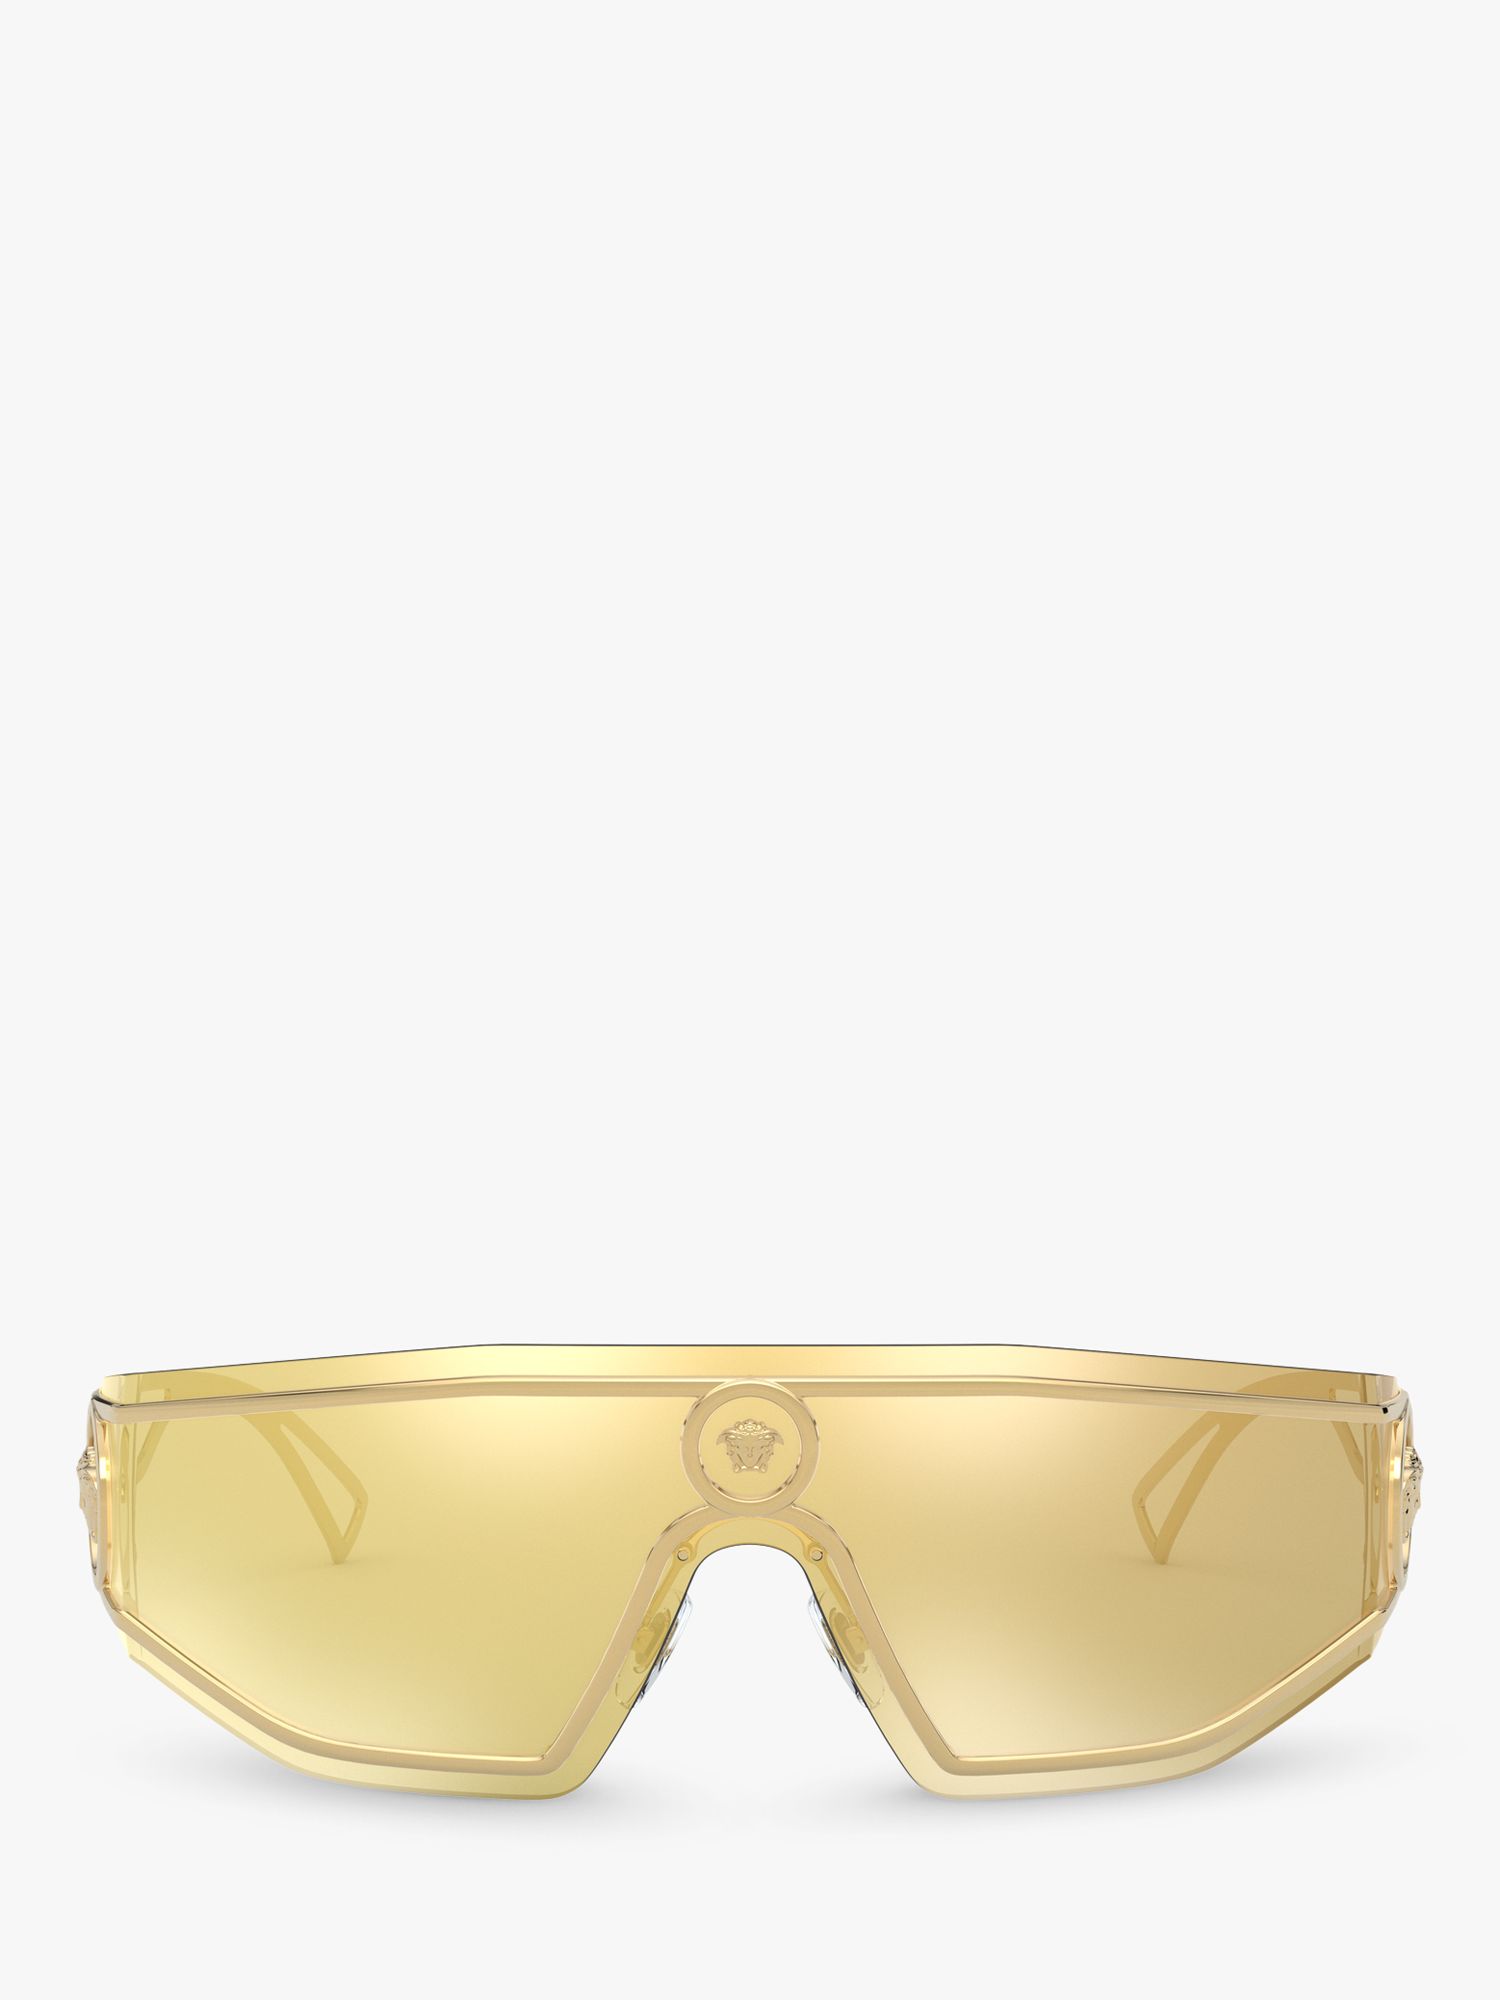 Versace VE2226 Men's Irregular Sunglasses, Gold